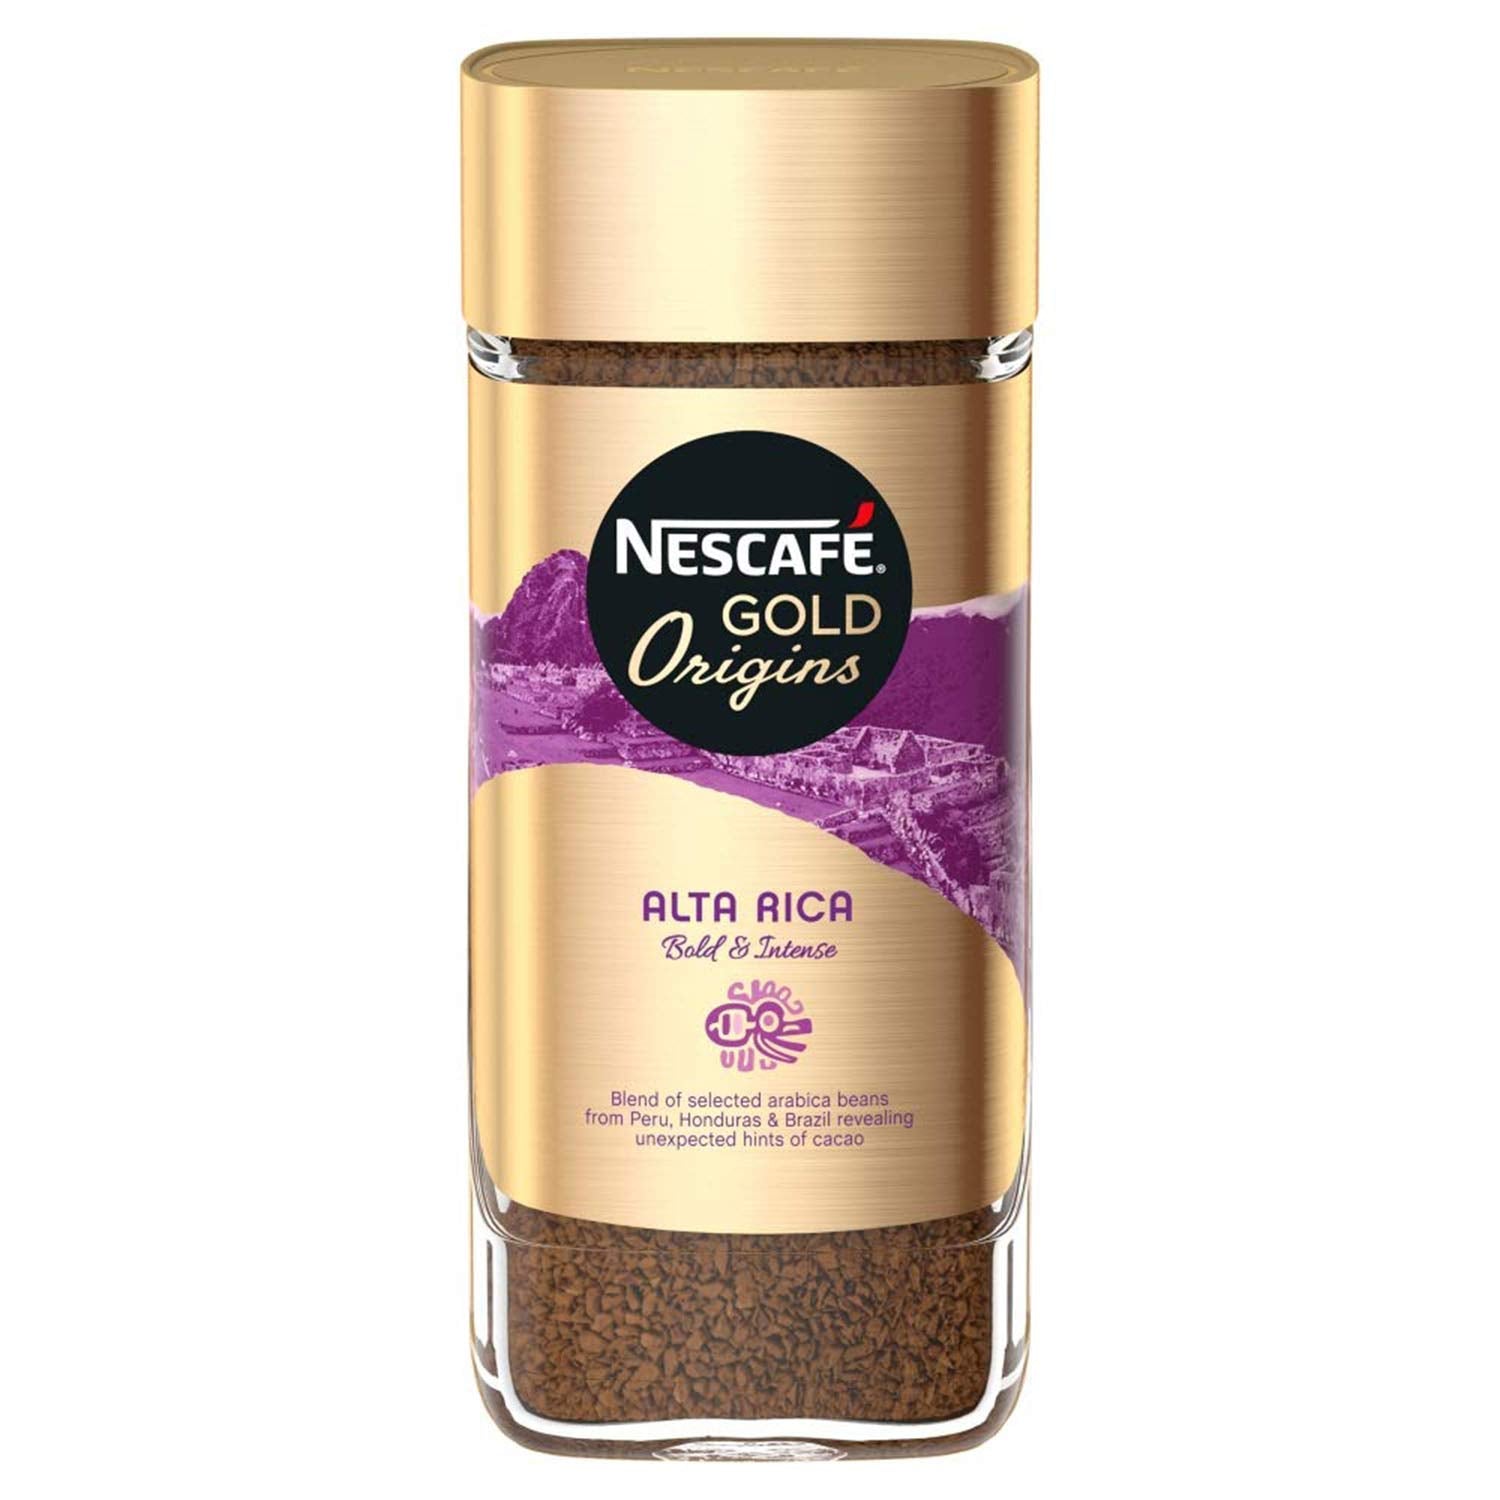 Nescafe Gold Origins Uganda-Kenya Coffee, 100 g